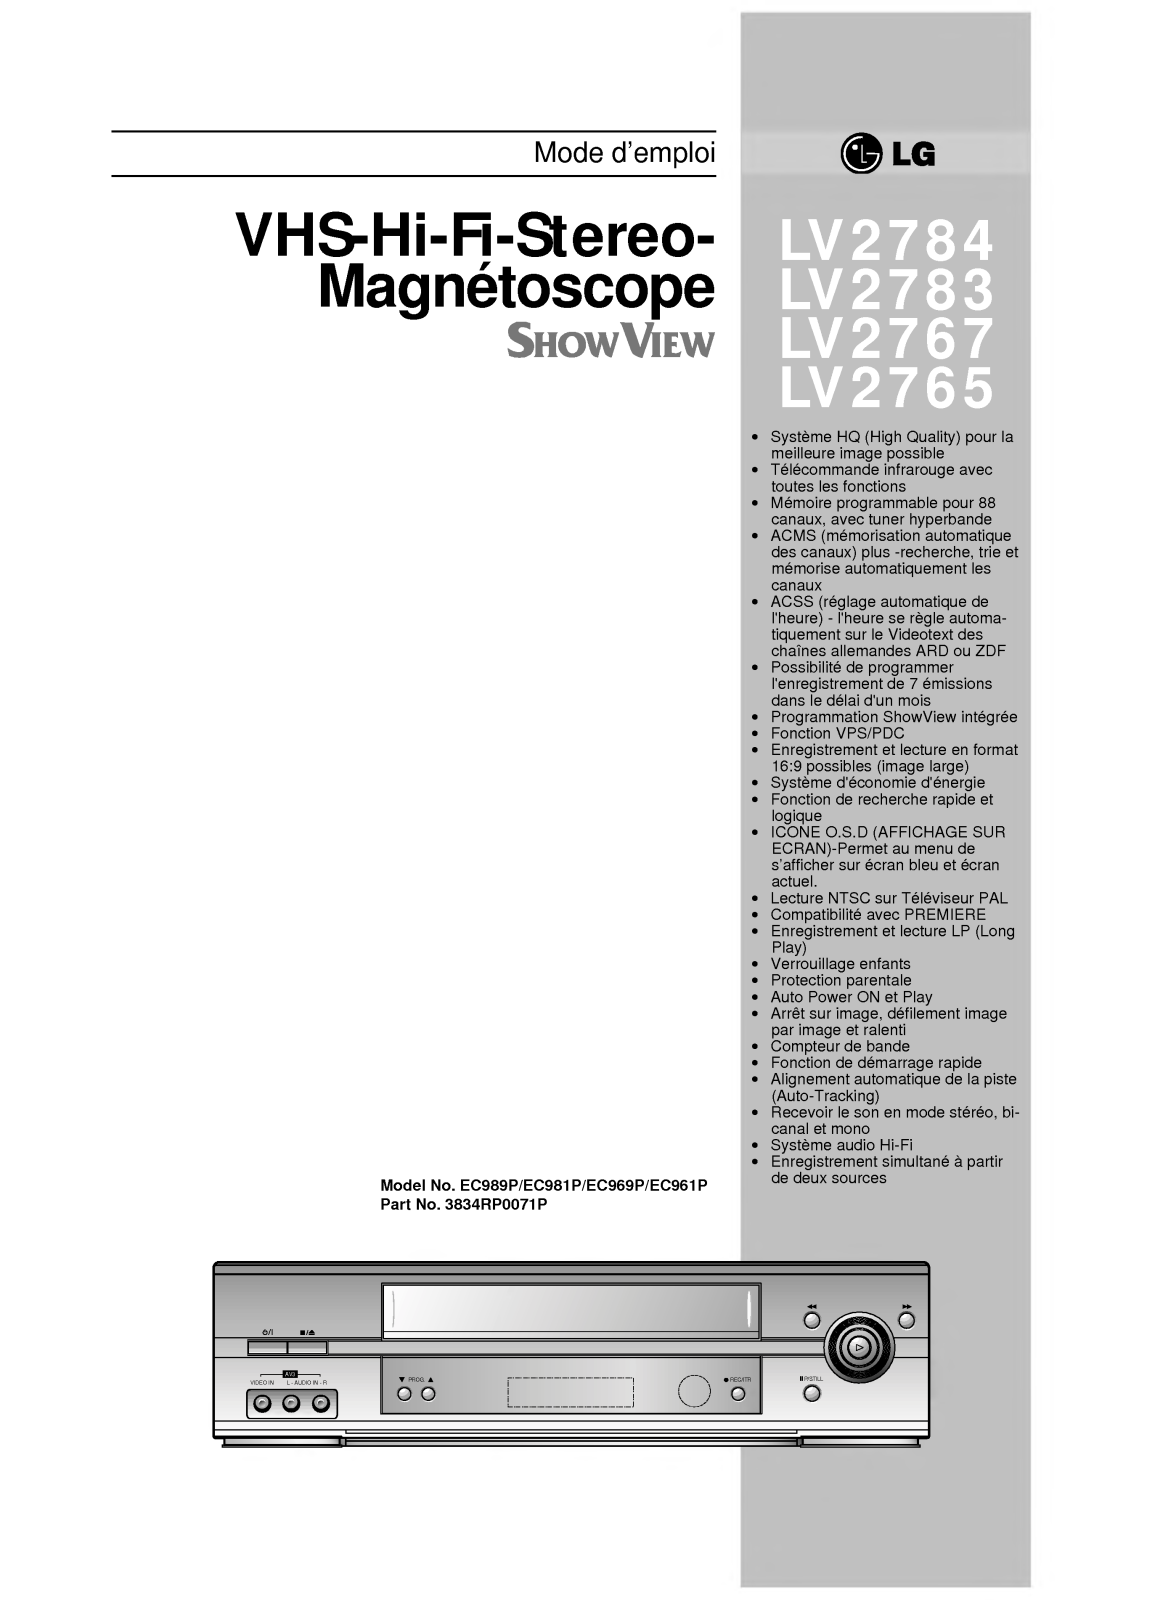 LG LV2783, LV2784 Manual